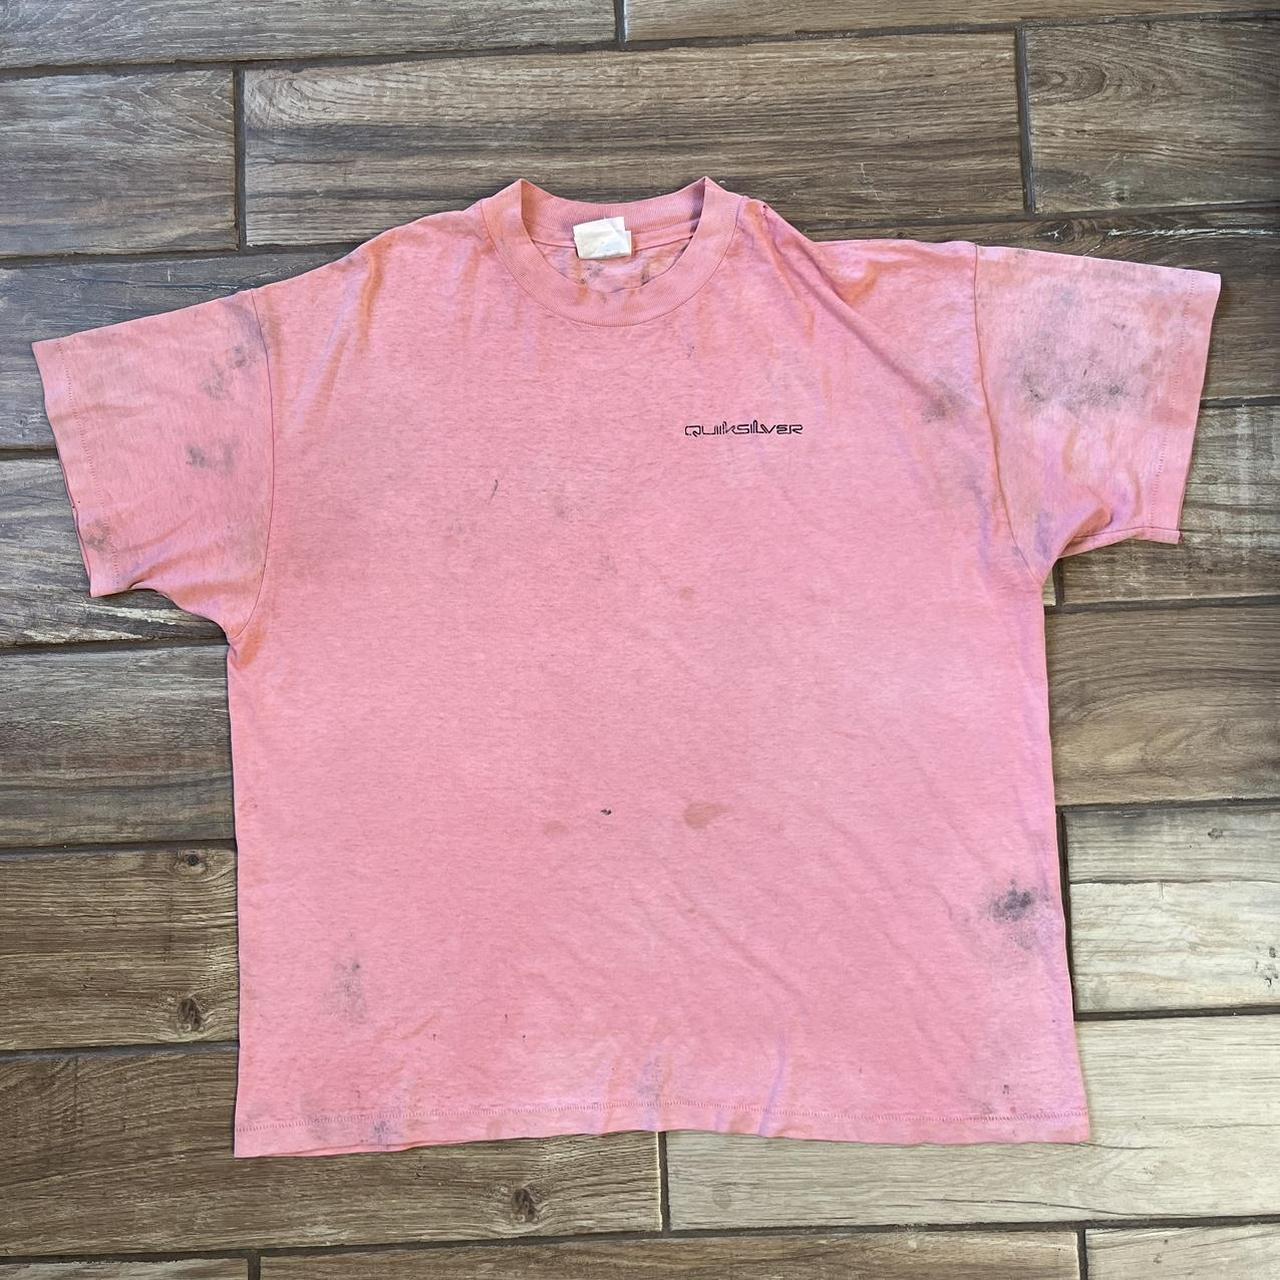 Quiksilver Men's Pink and Black T-shirt (3)